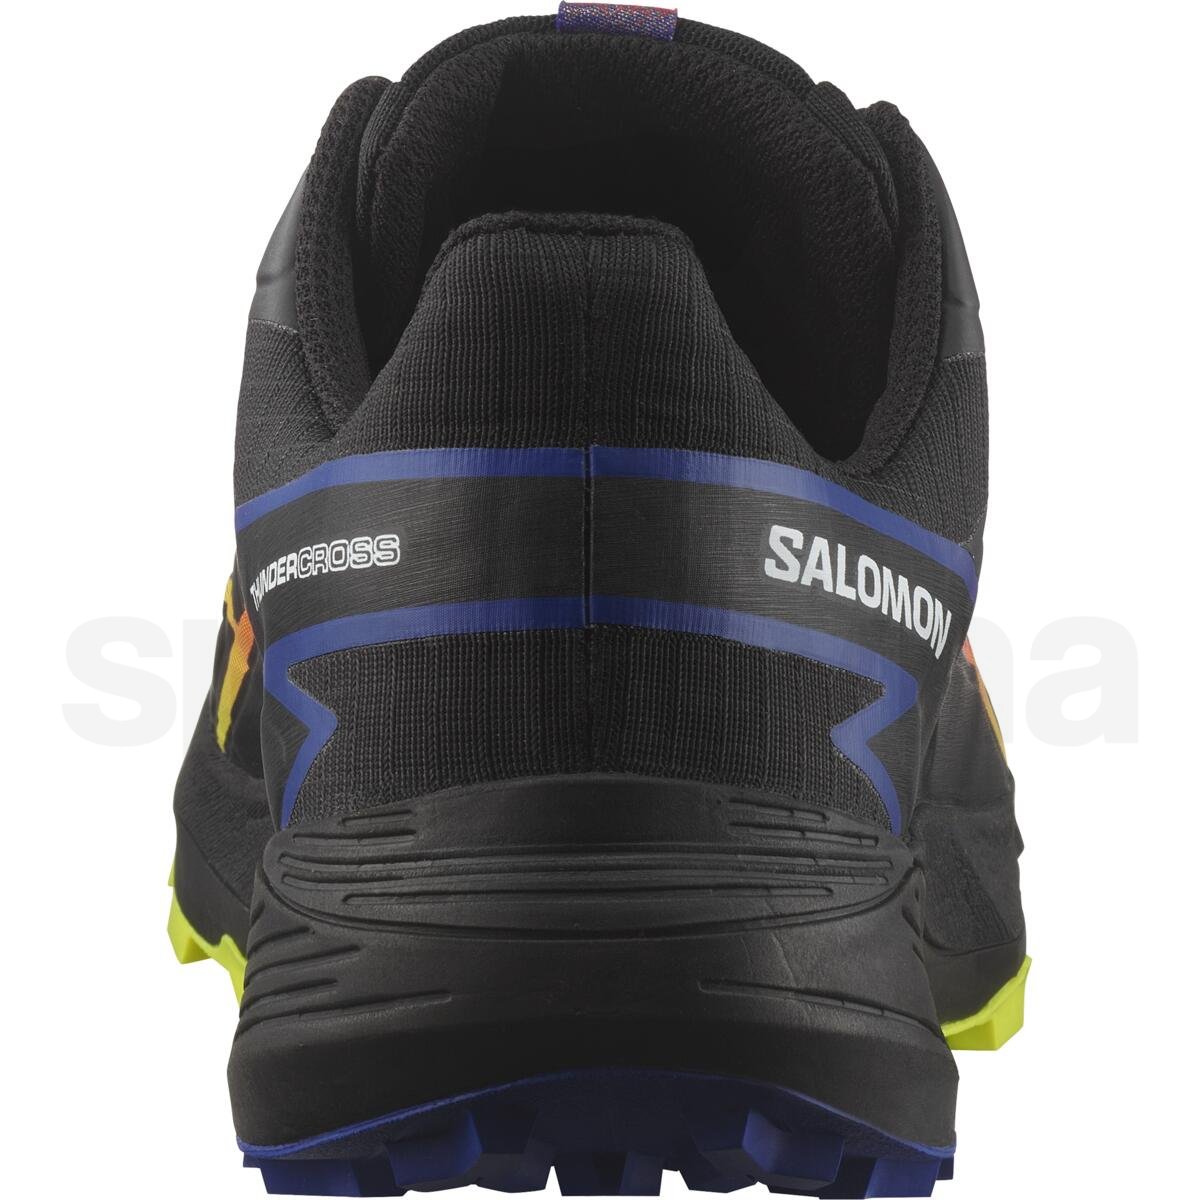 Obuv Salomon Thundercross GTX Blue Fire - černá/modrá/červená/žlutá